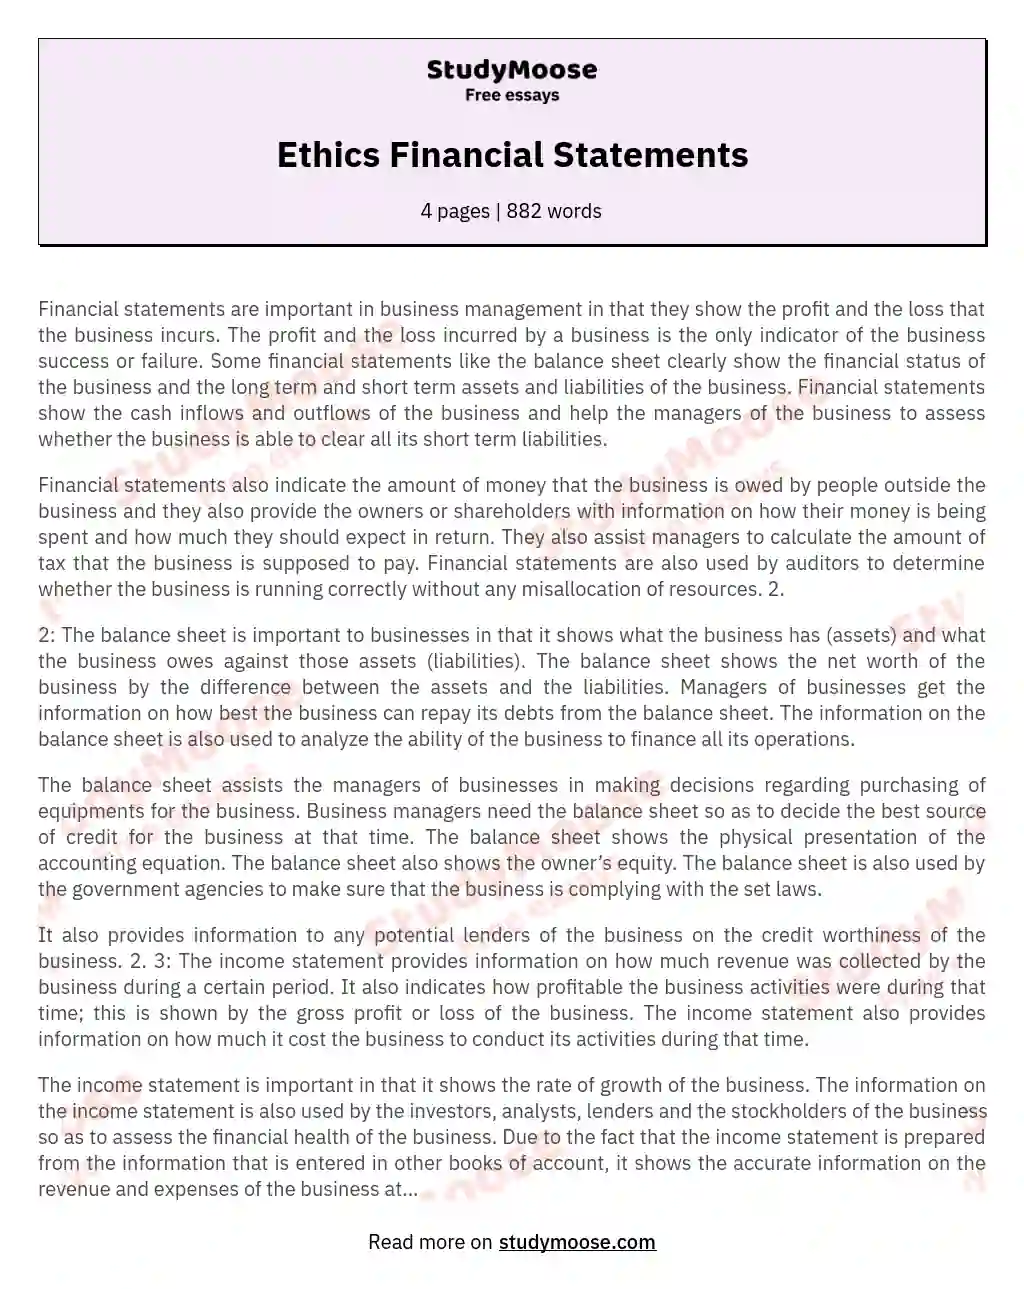 Ethics Financial Statements essay